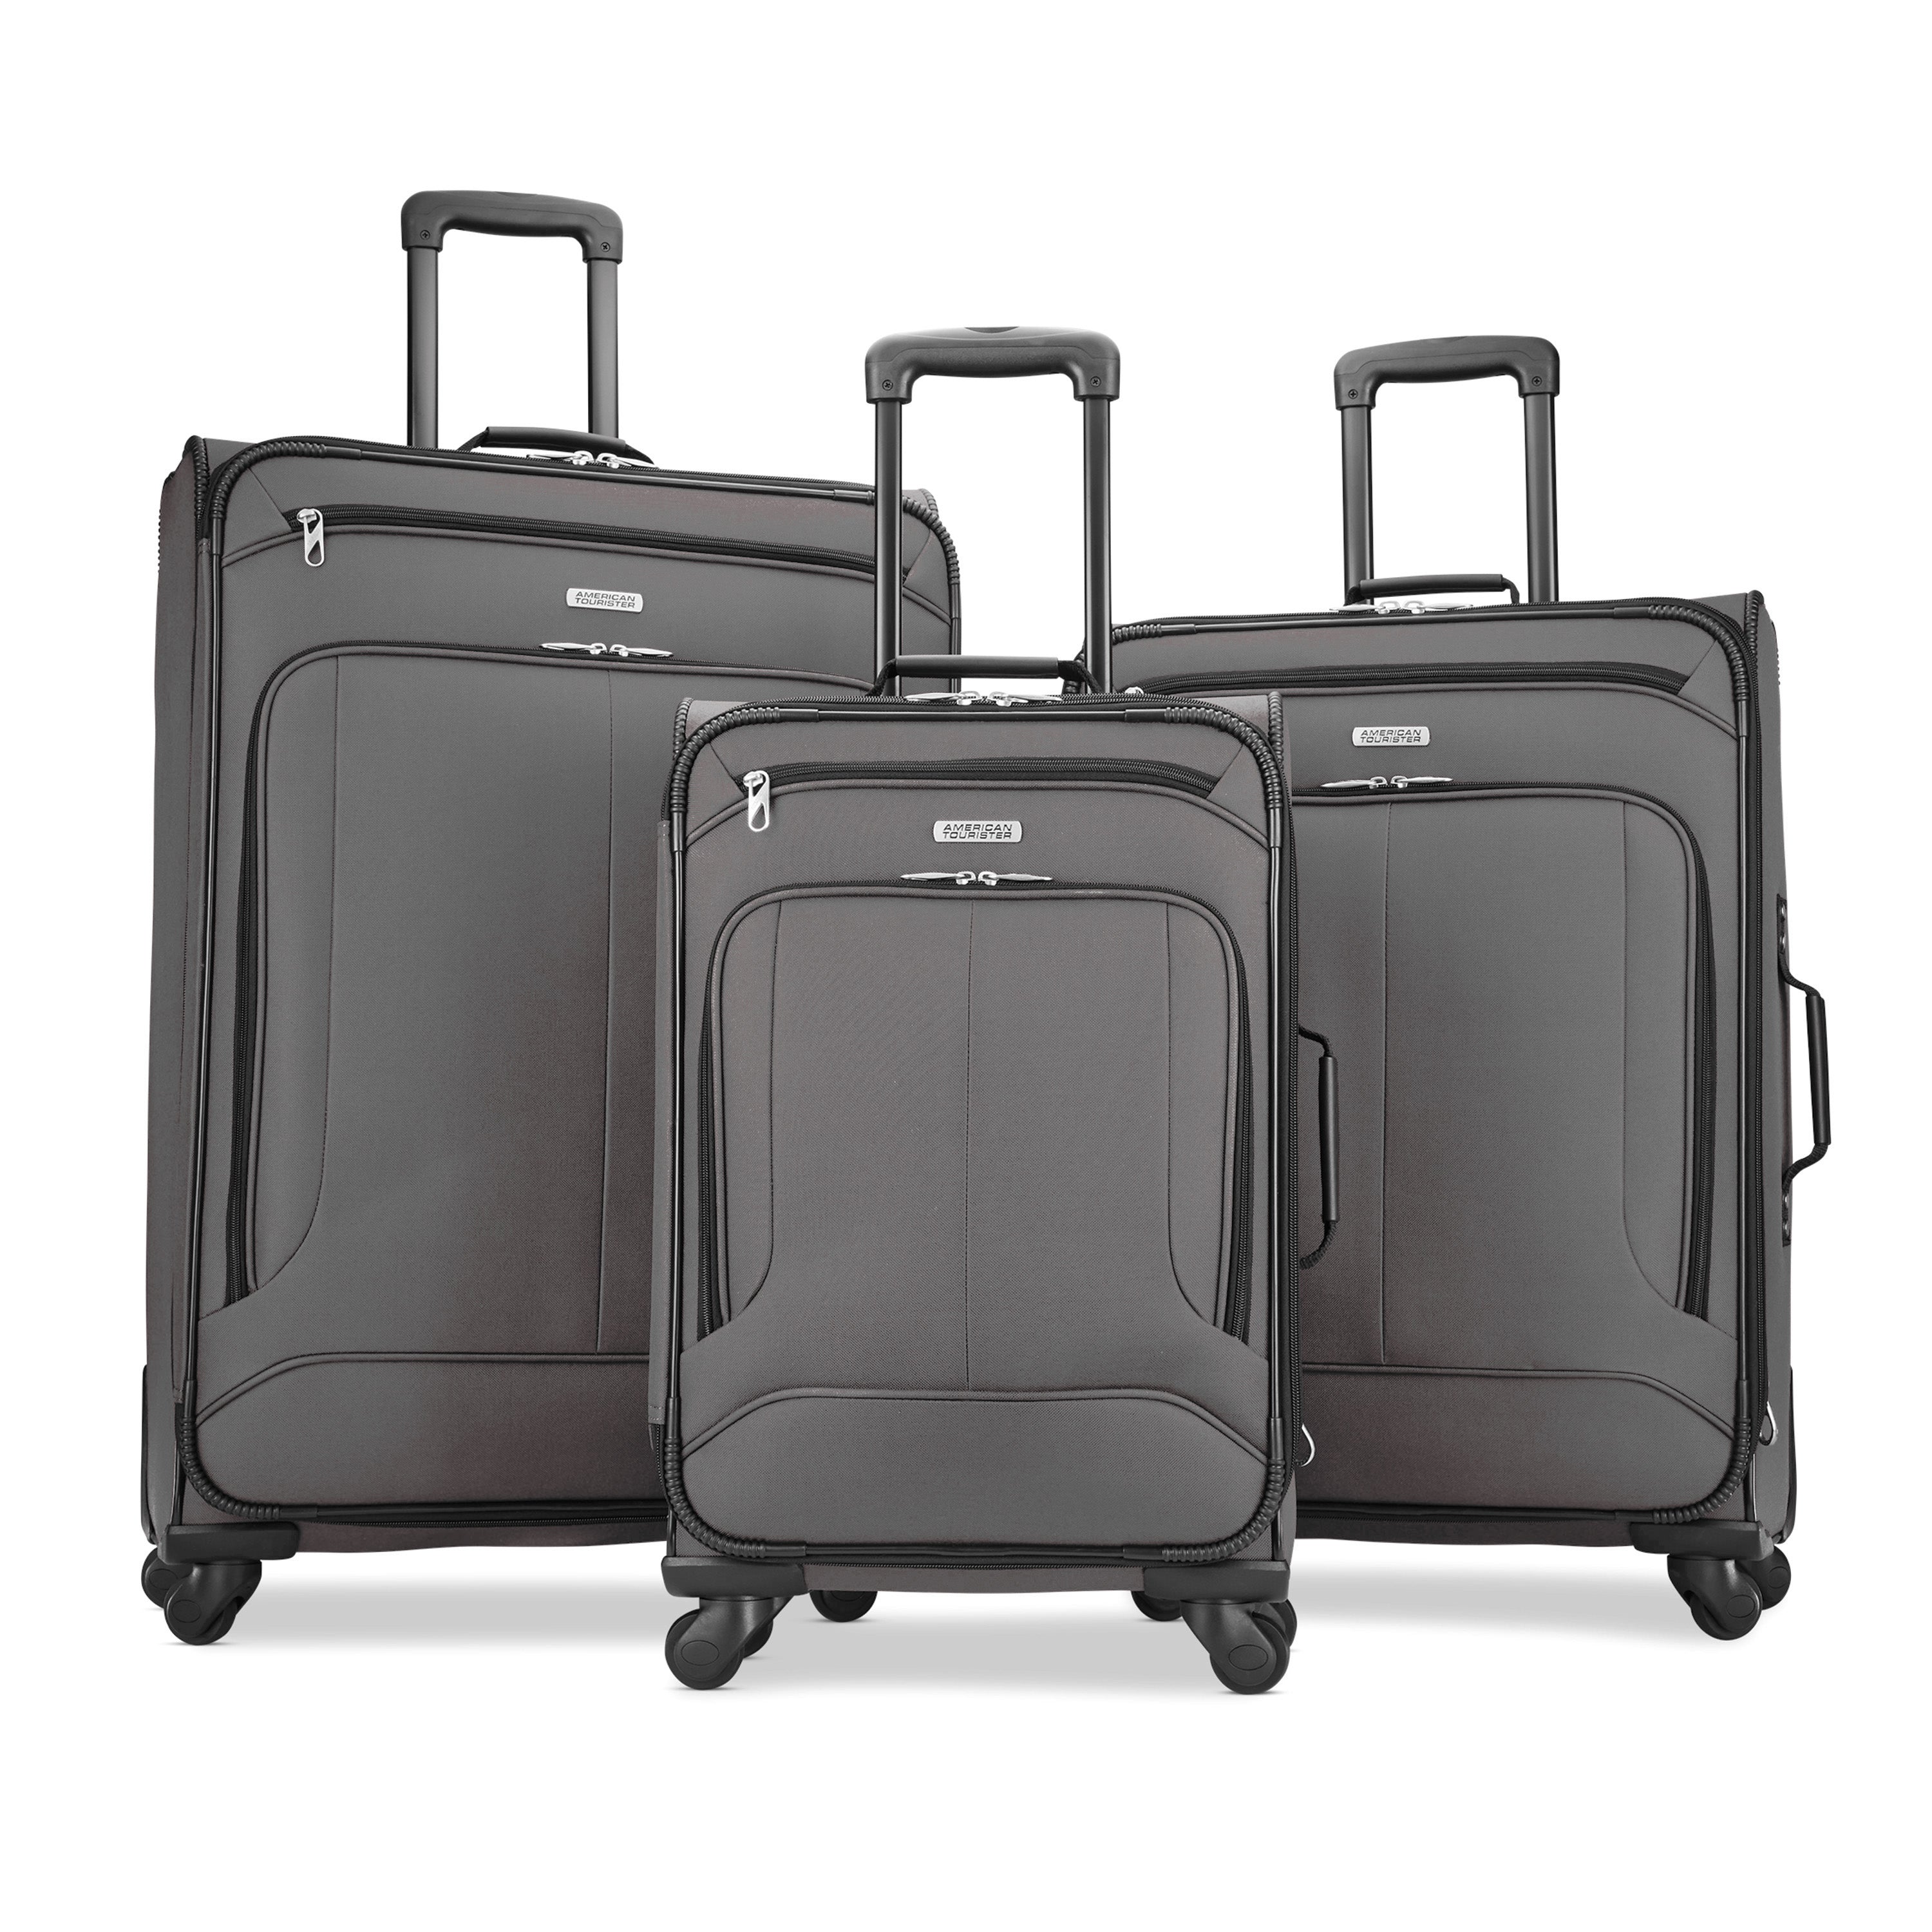 ESCAPE Smart Luggage Set - 3 Colours - ROLLOGO